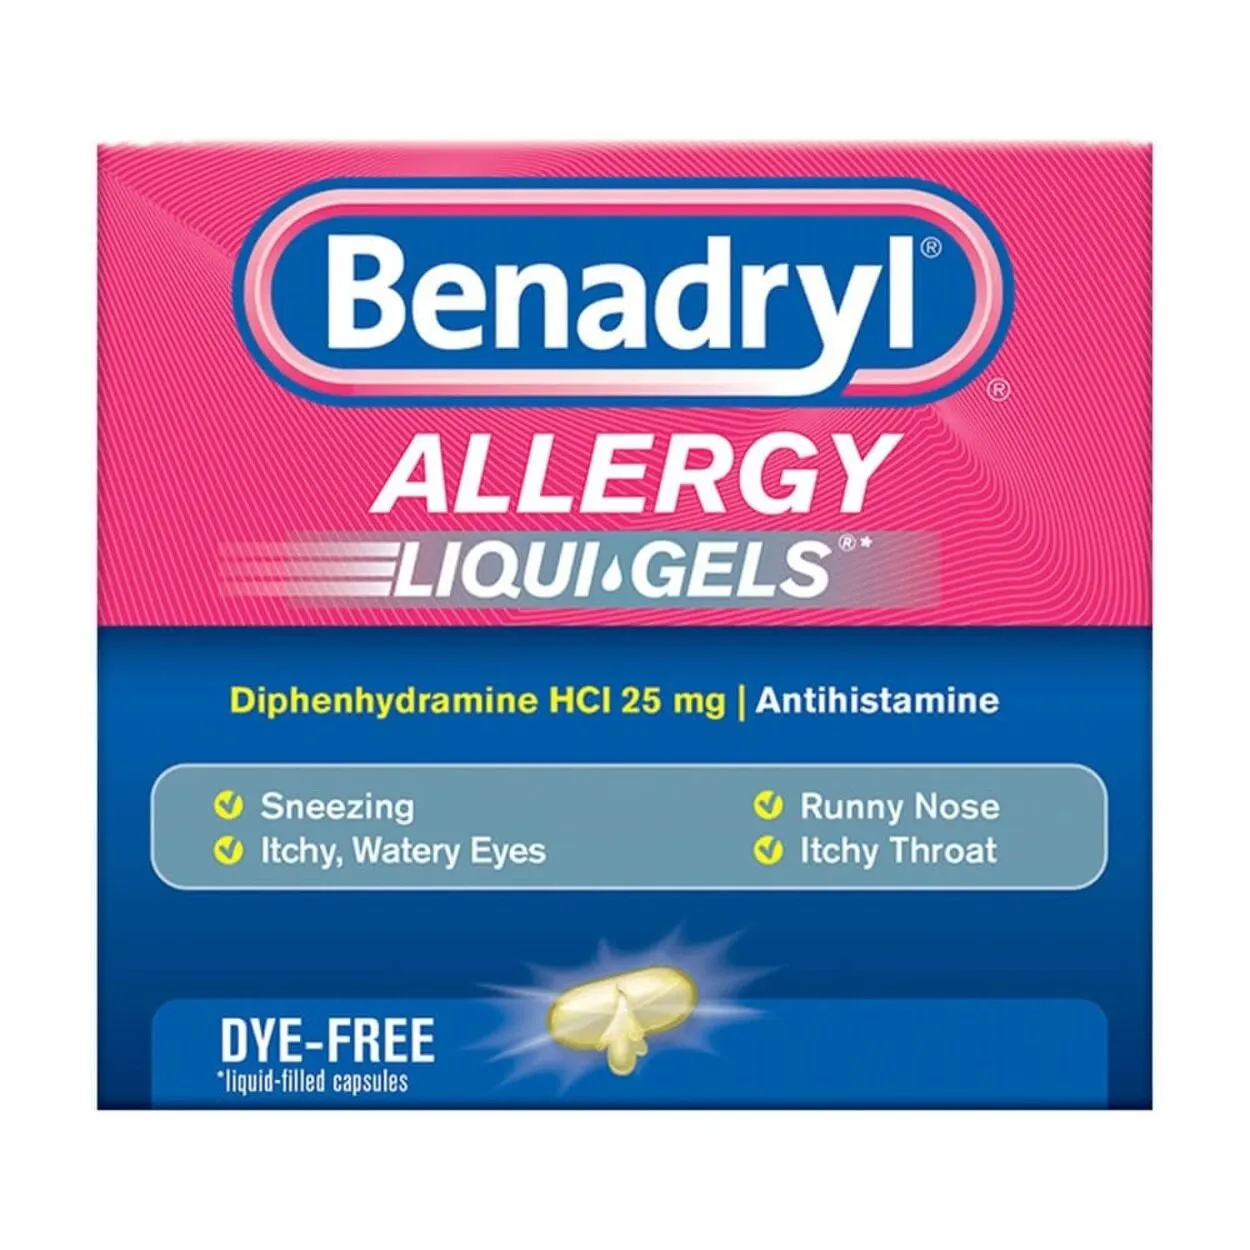 benadryl-allergy-liquigels